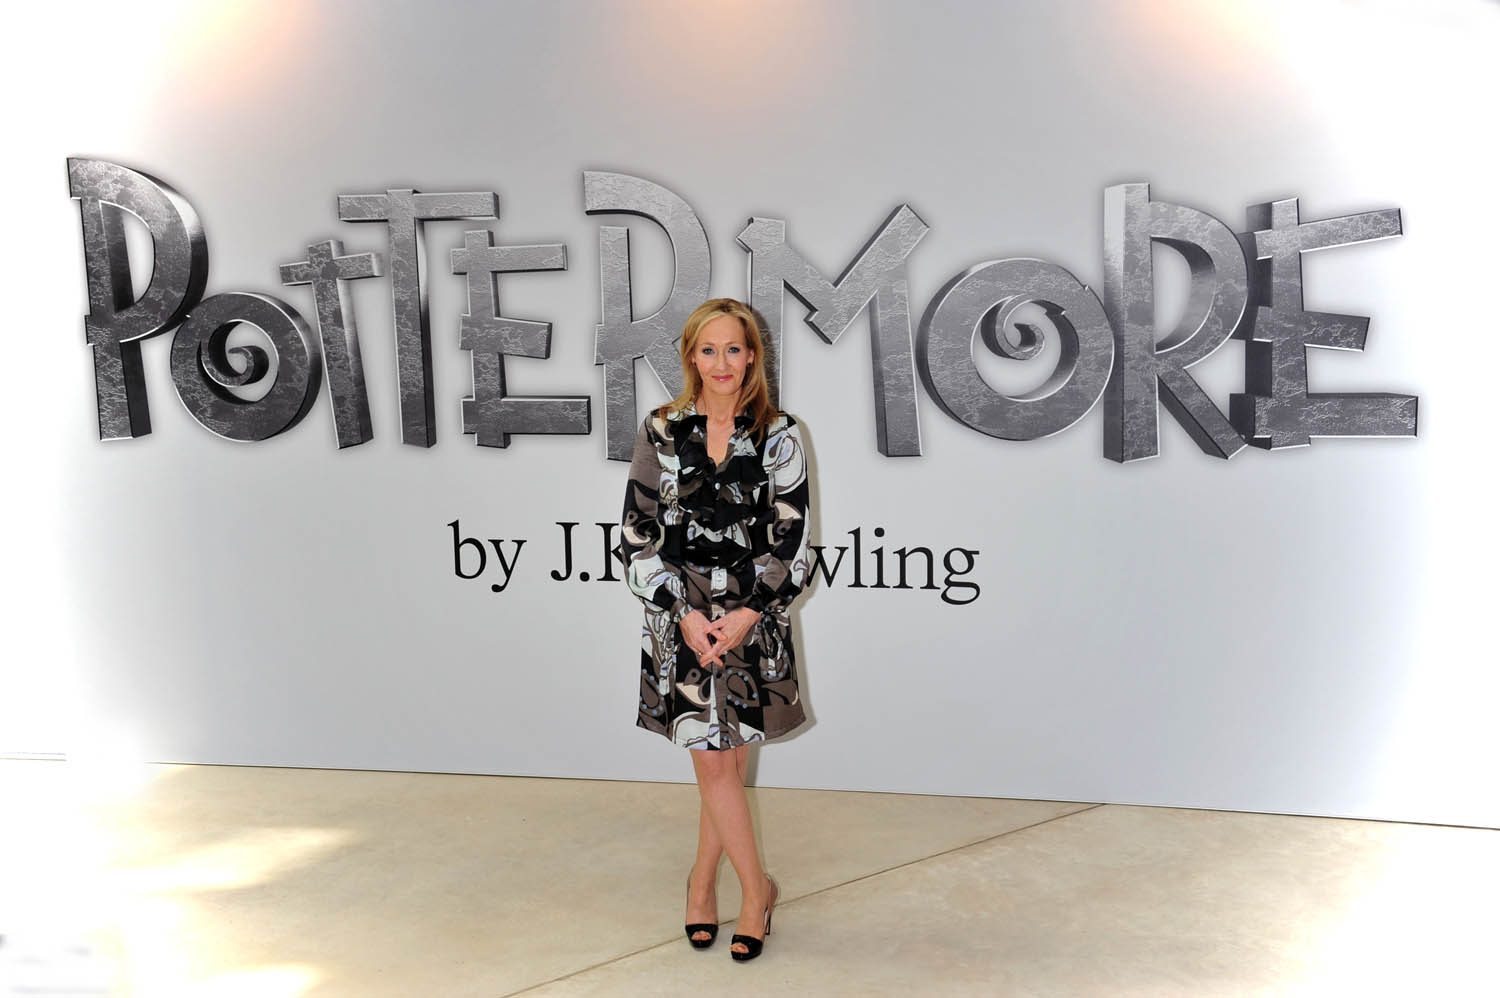 J. K. Rowling live-blogs for the wizarding world, fans rejoice